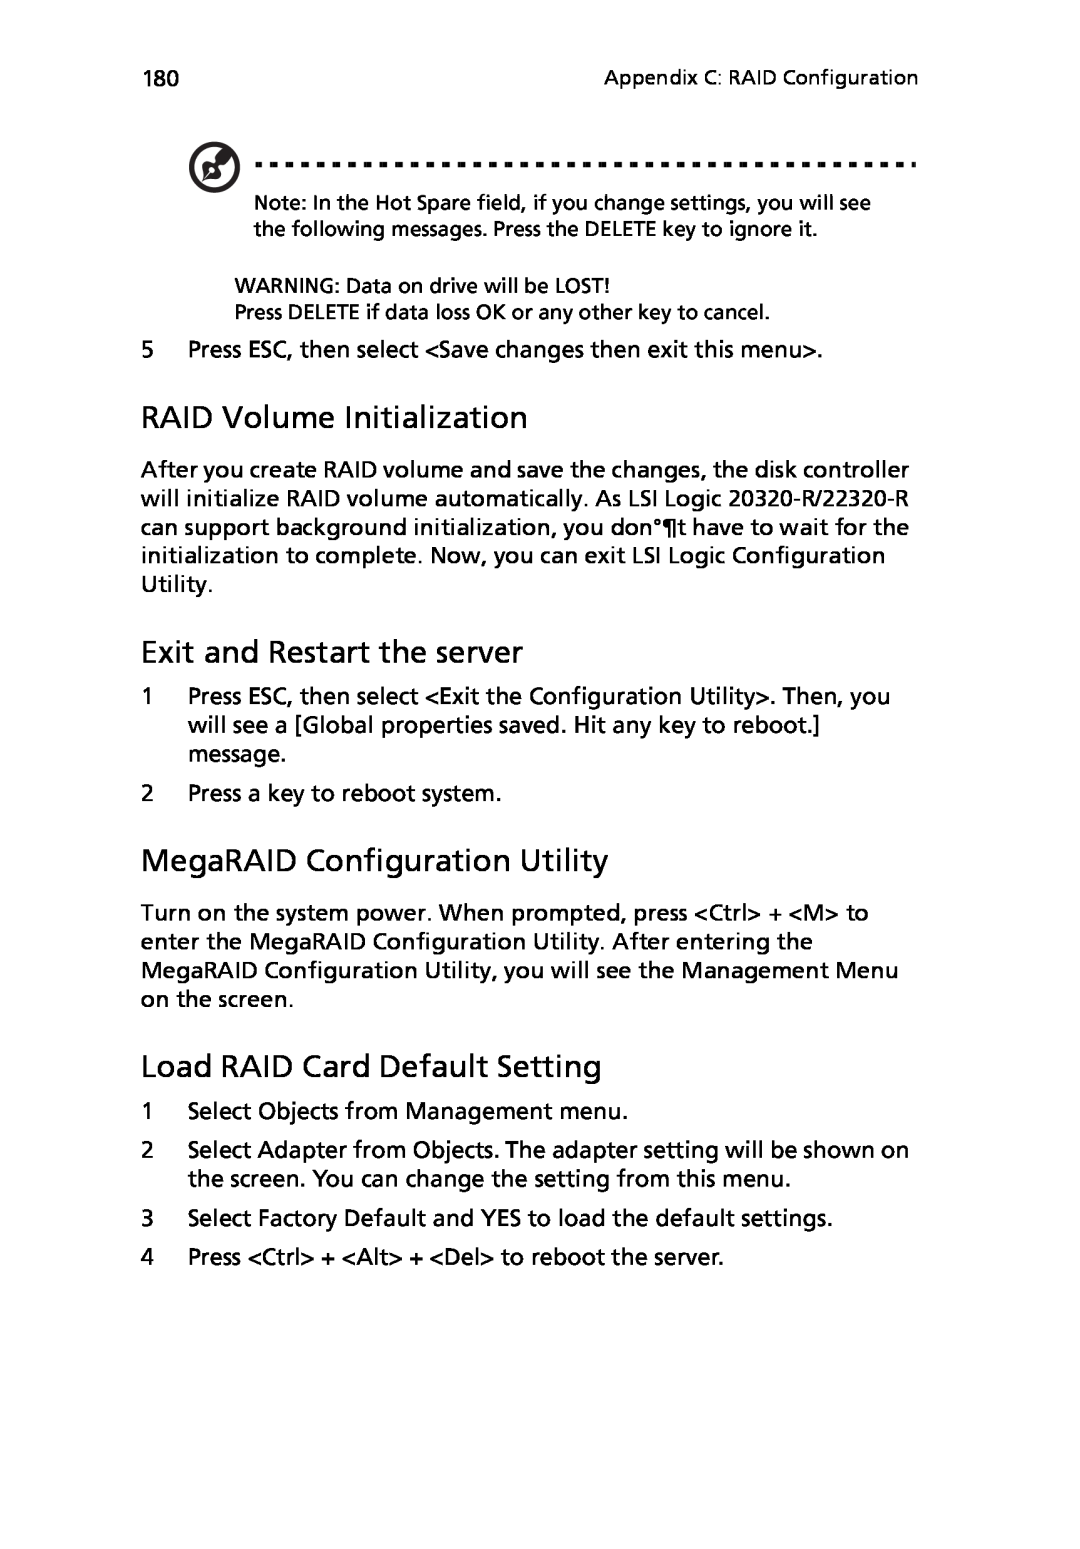 Acer Altos R710 manual RAID Volume Initialization, Exit and Restart the server, MegaRAID Configuration Utility 